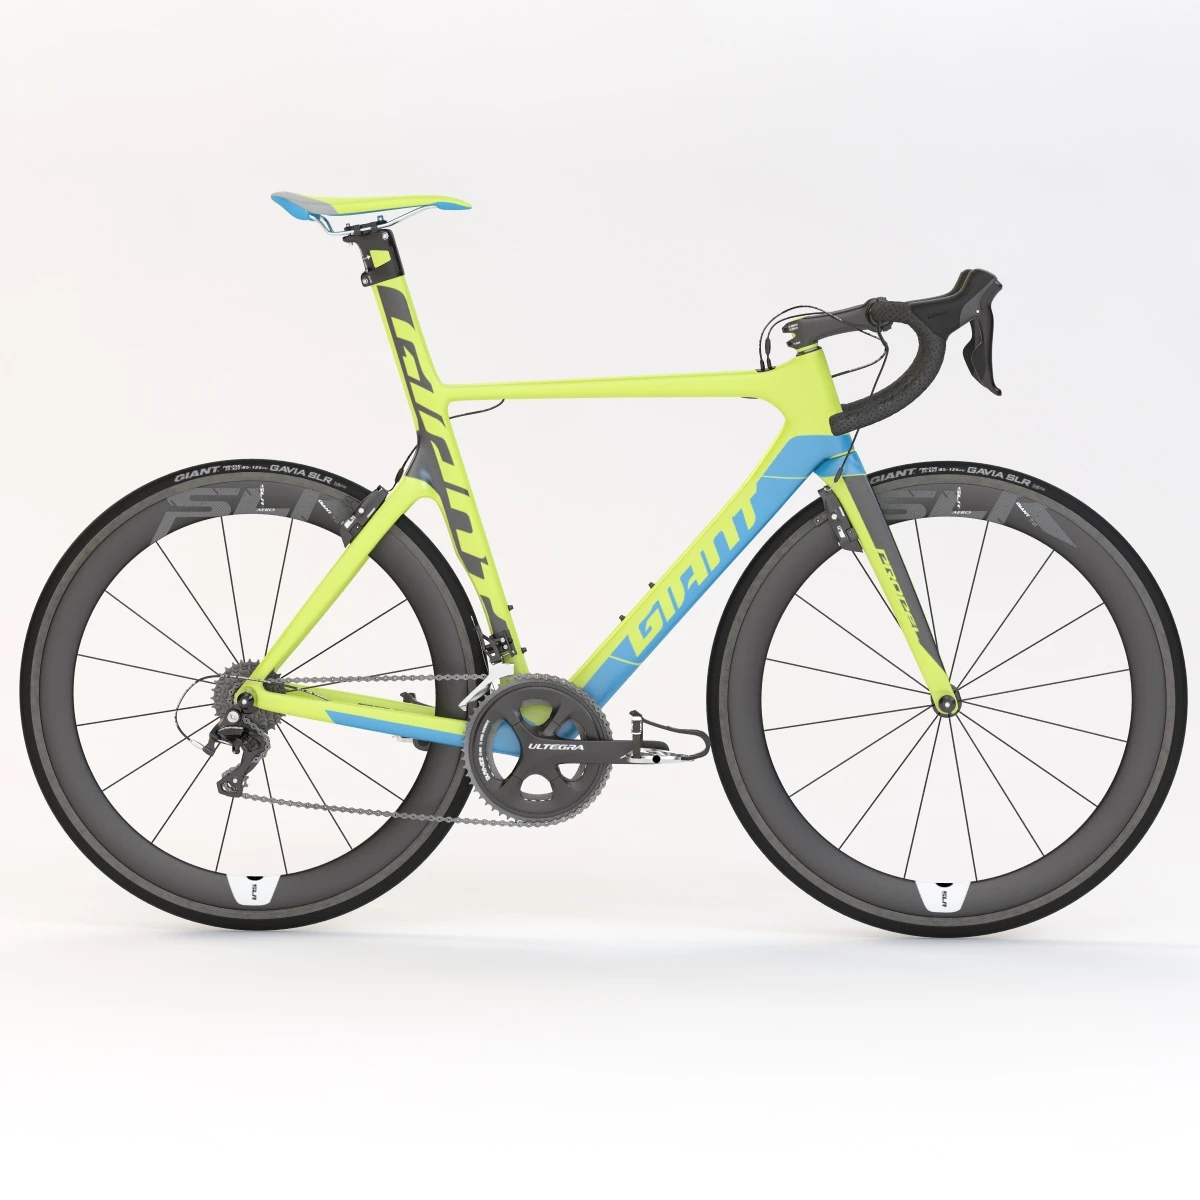 Giant Propel Advanced Sl-2 Green-Blue Lightweight Sprinter Bicycle 3D Model_04